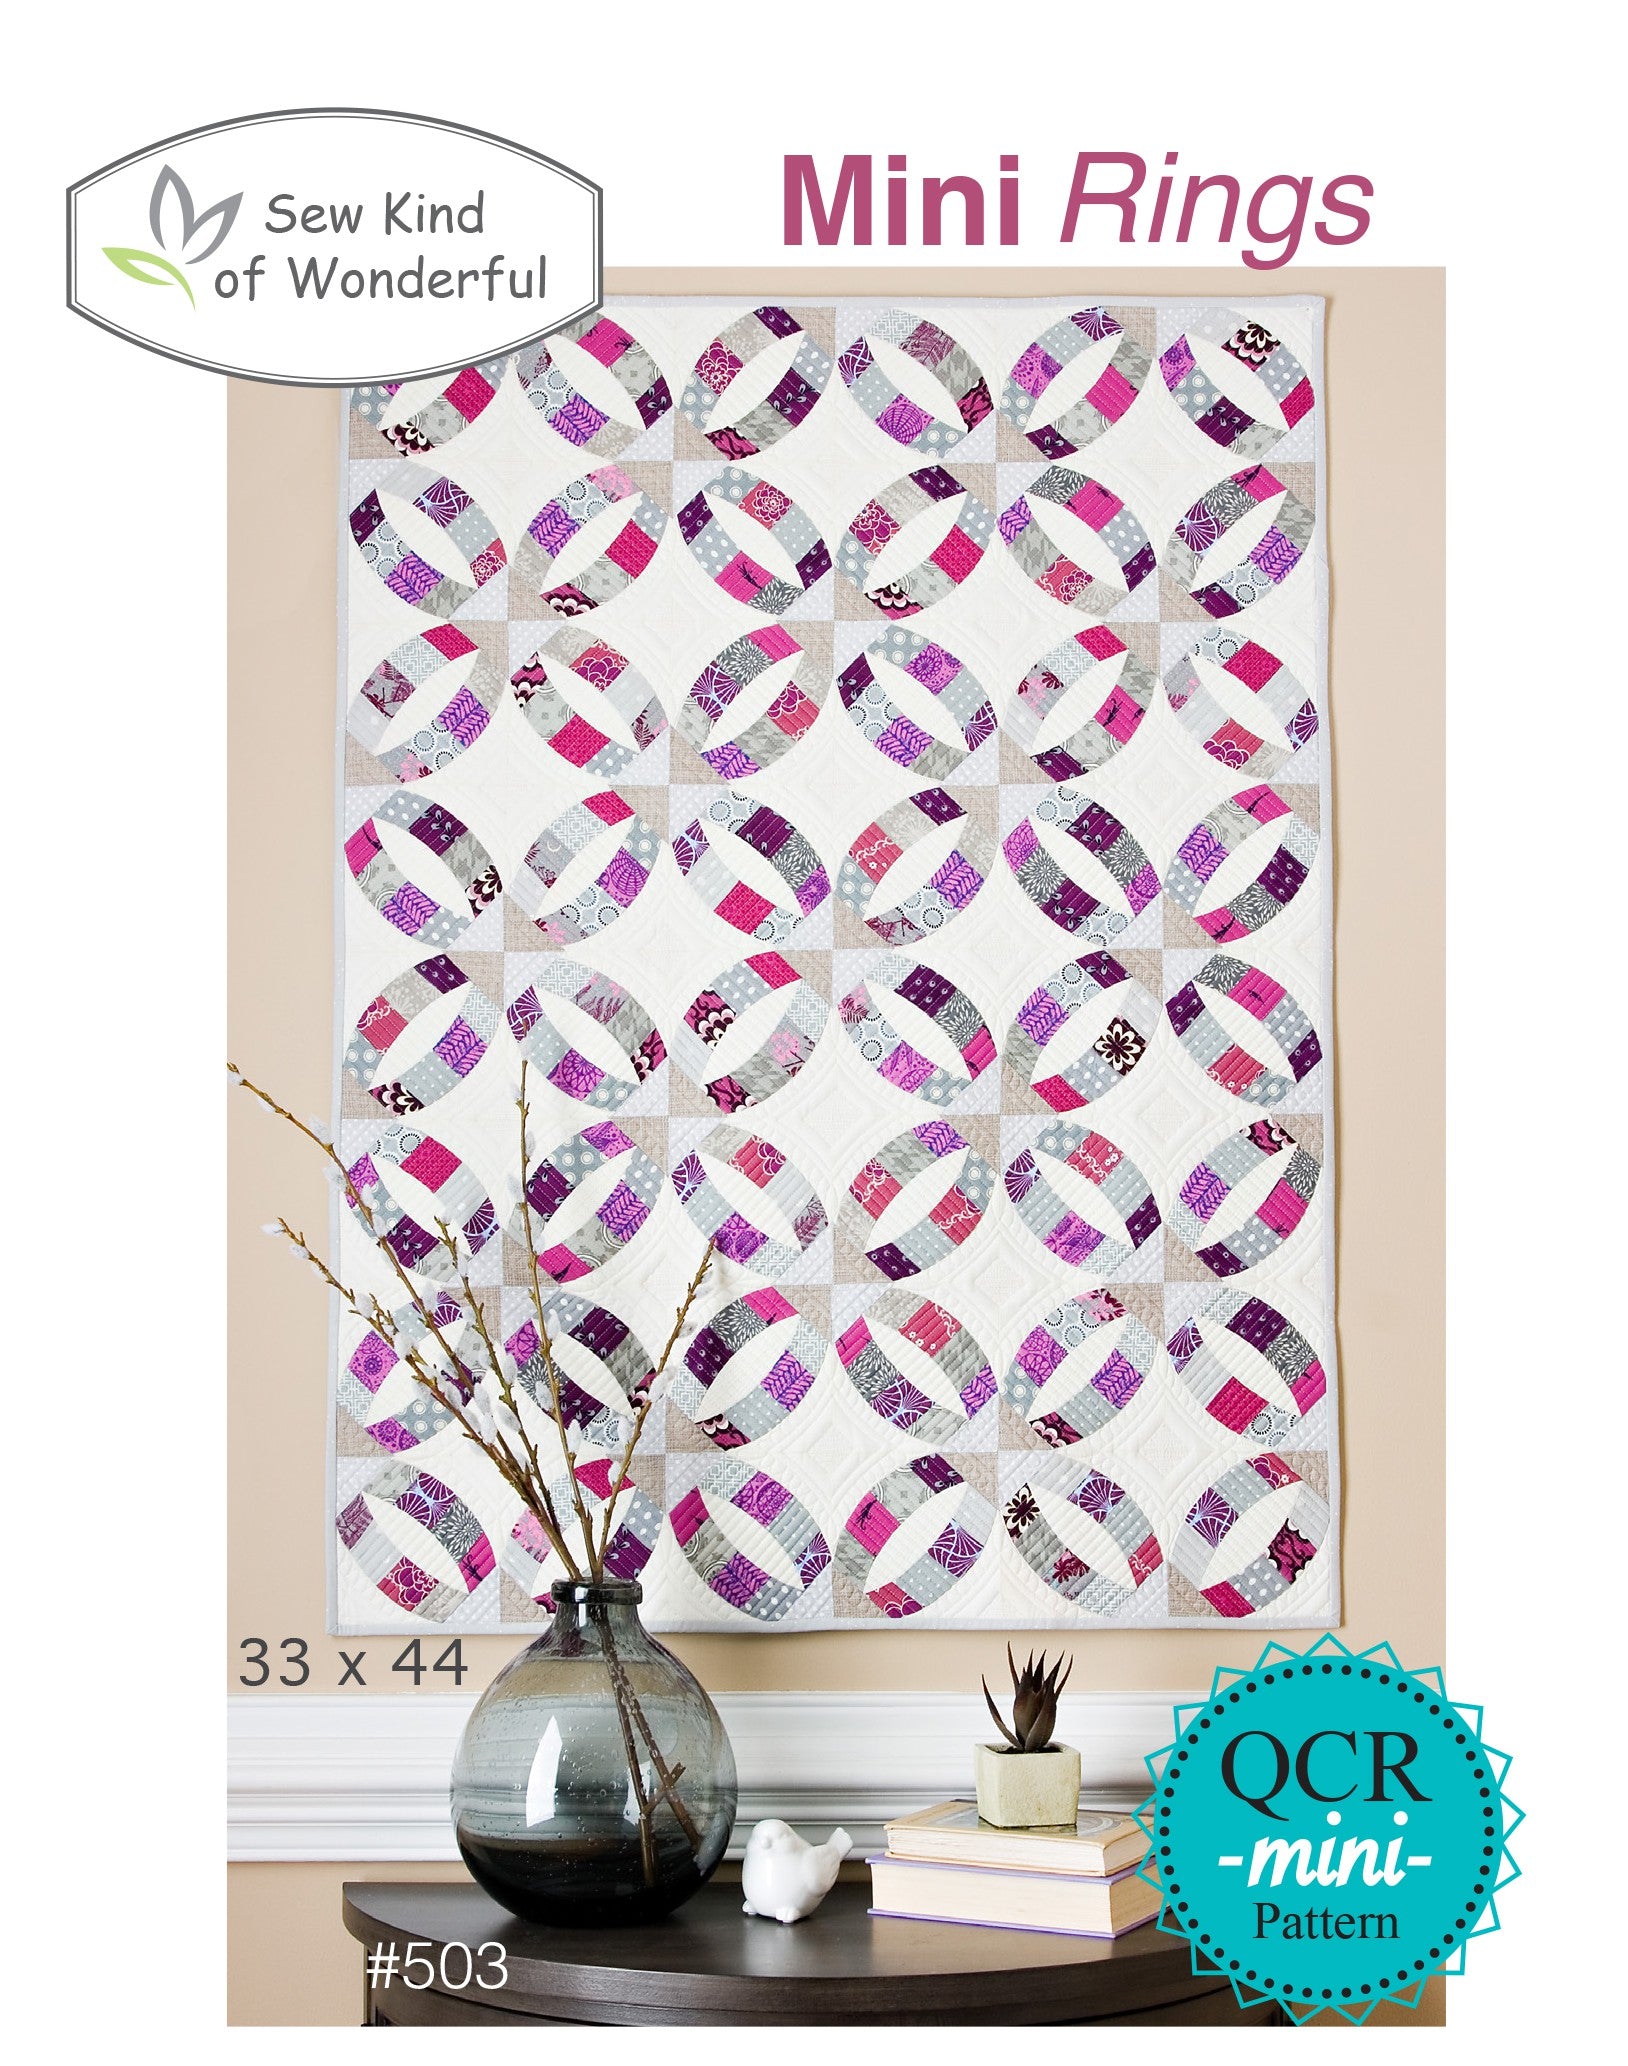 Mini Rings Quilt Pattern by Jenny Pedigo of Sew Kind of Wonderful